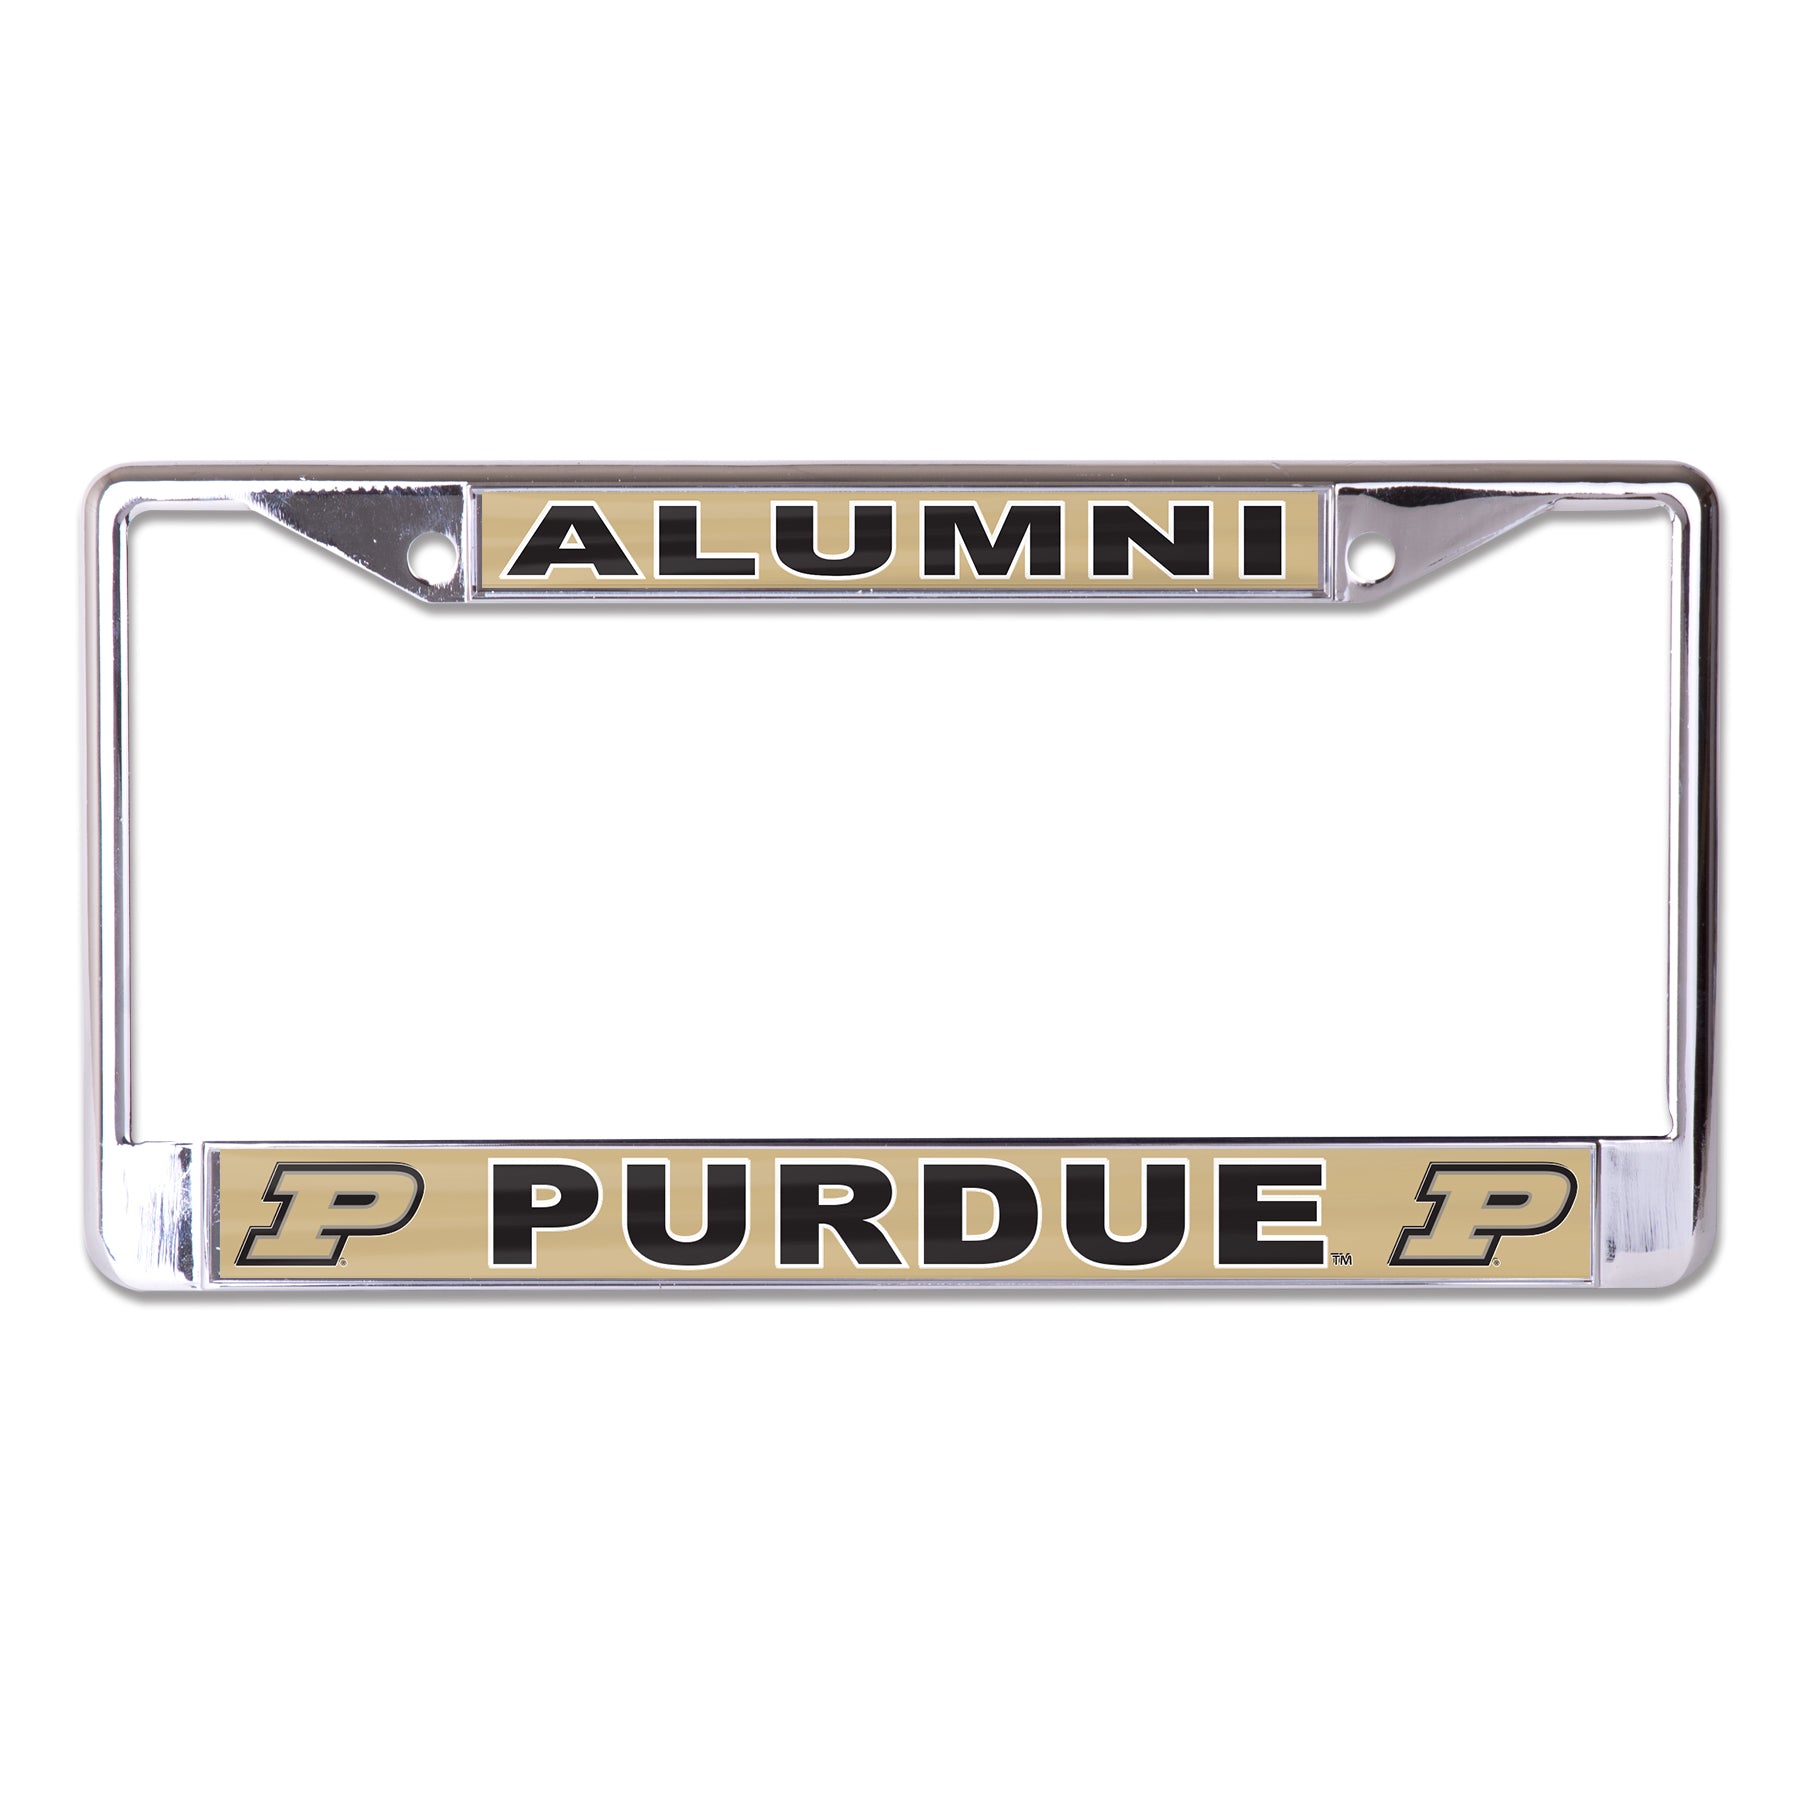 Purdue University Alumni Chrome License Plate Frame